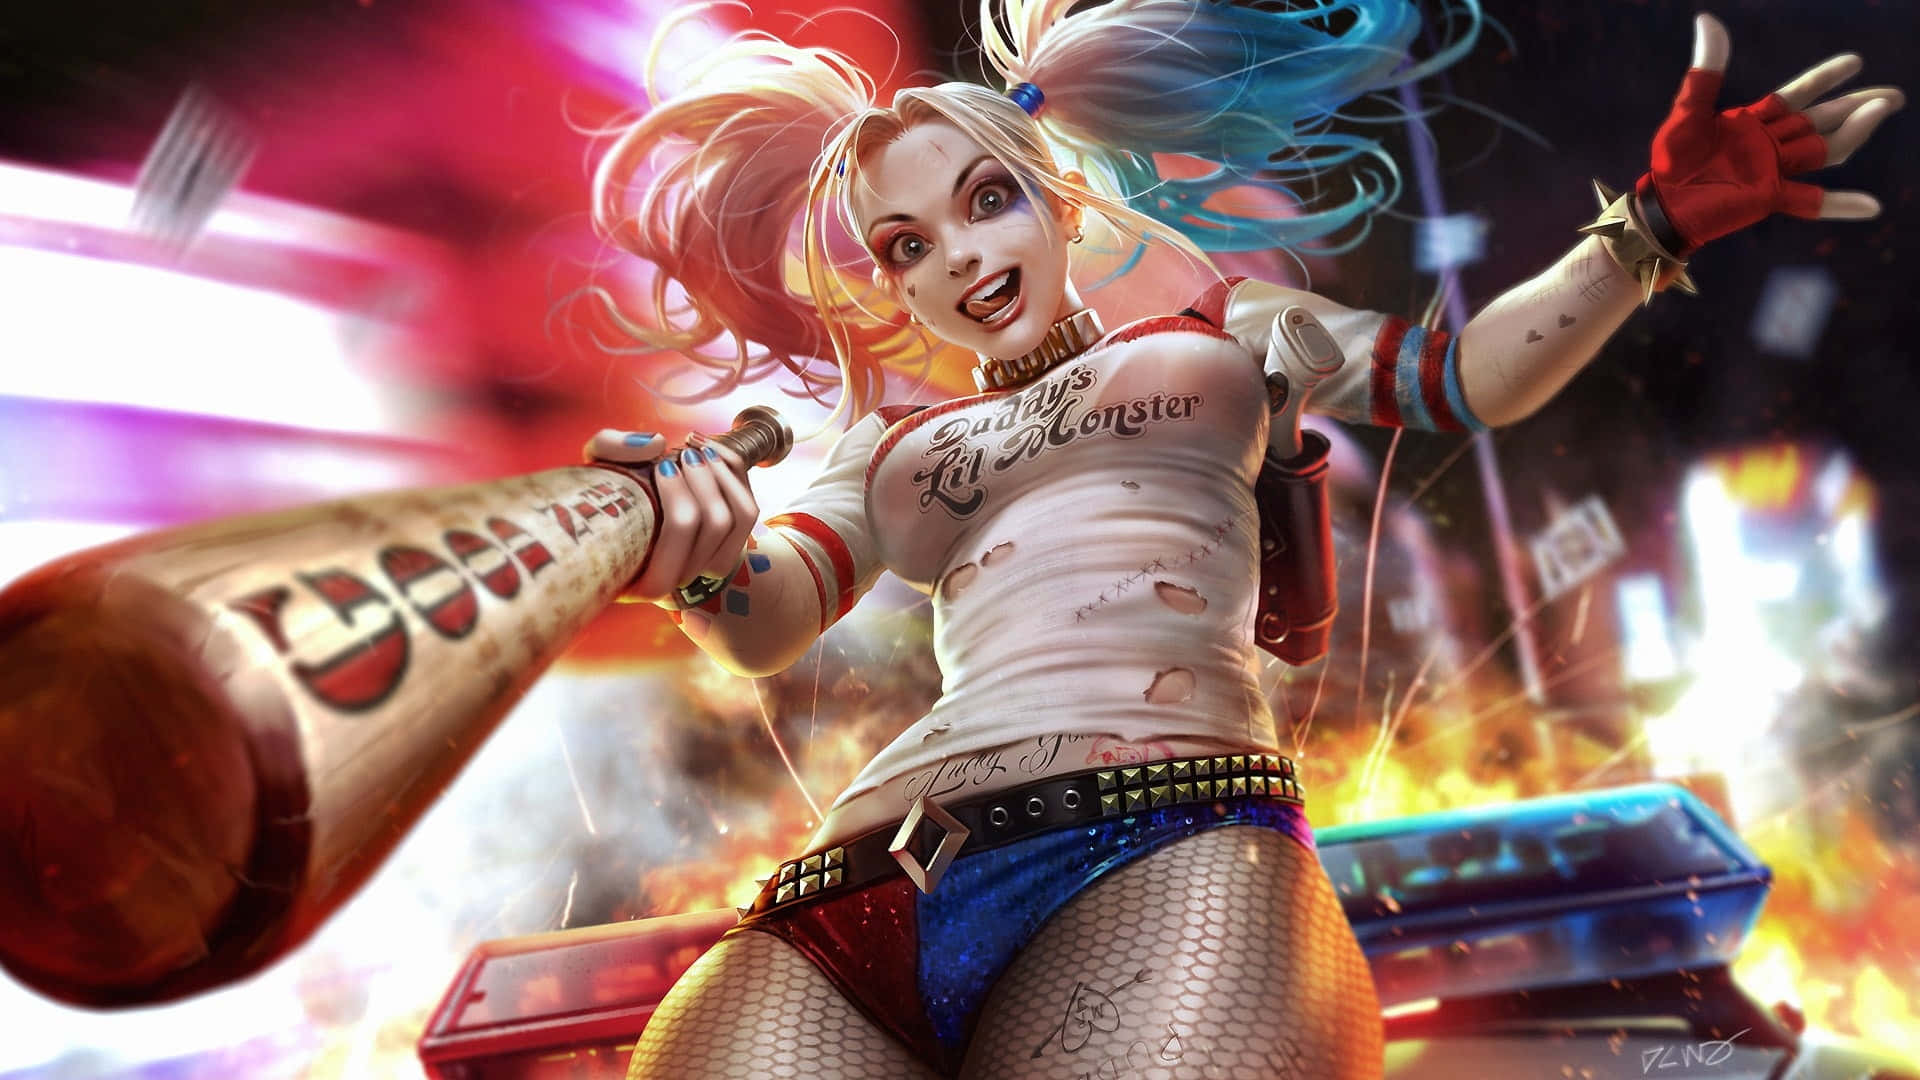 Harley Quinn-billeder, vilde og abstrakte, på din skærm.